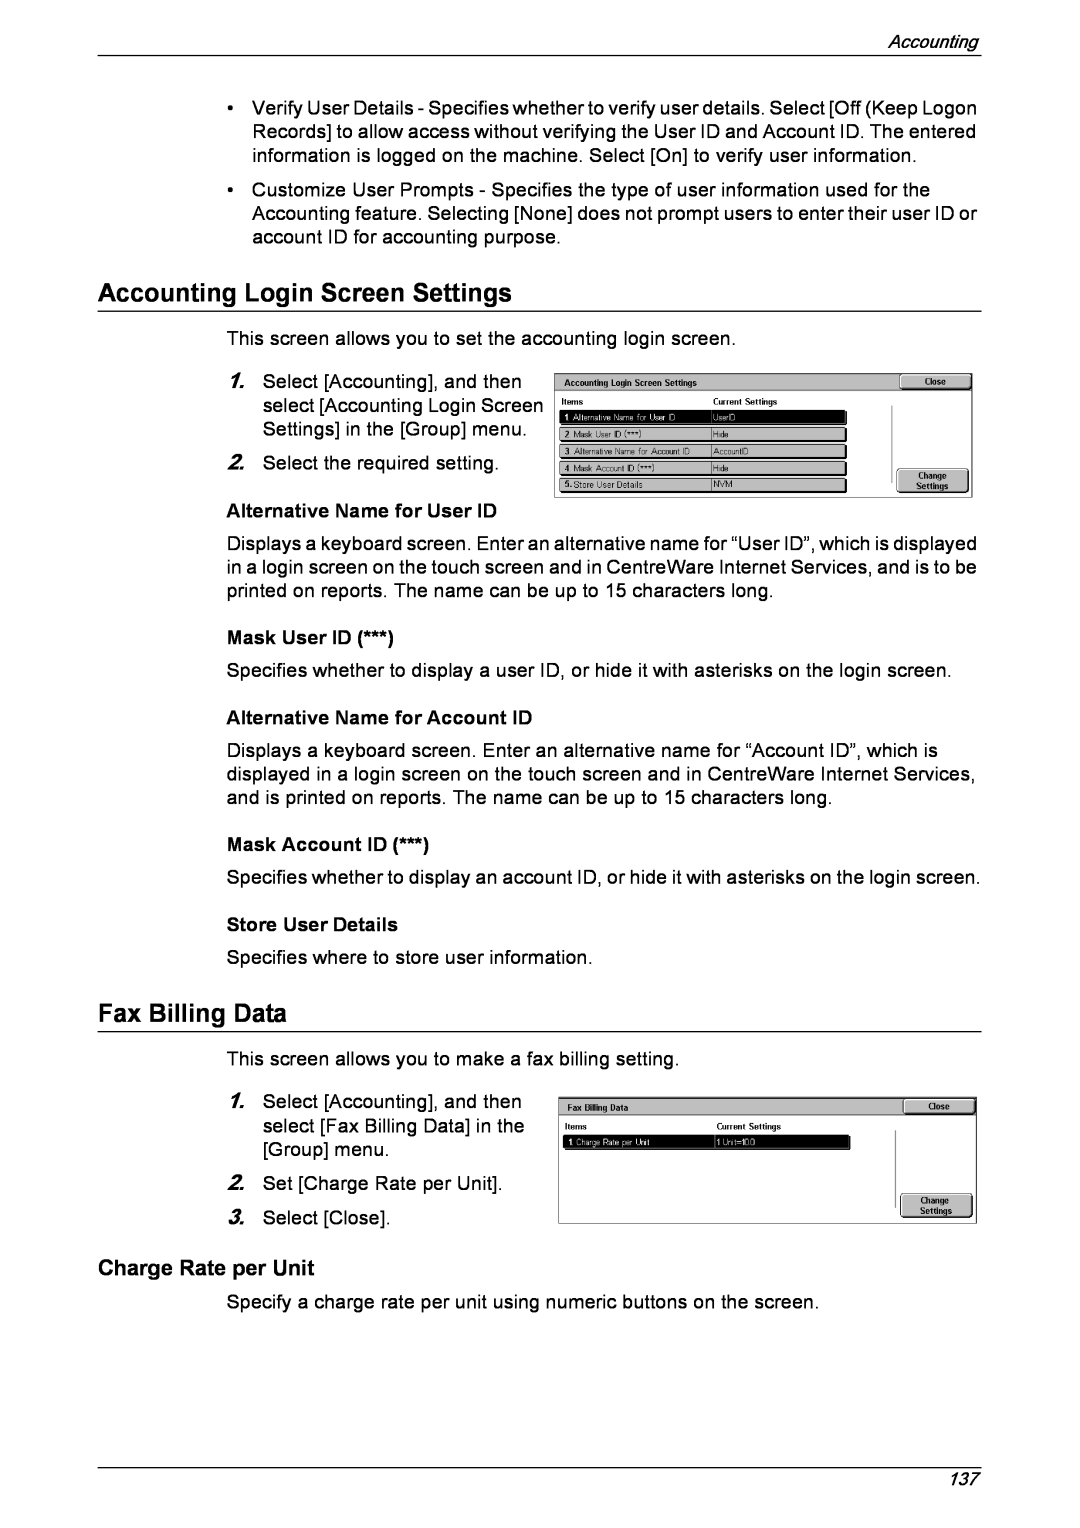 Xerox 5222 Accounting Login Screen Settings, Fax Billing Data, Alternative Name for User ID, Mask User ID, Mask Account ID 